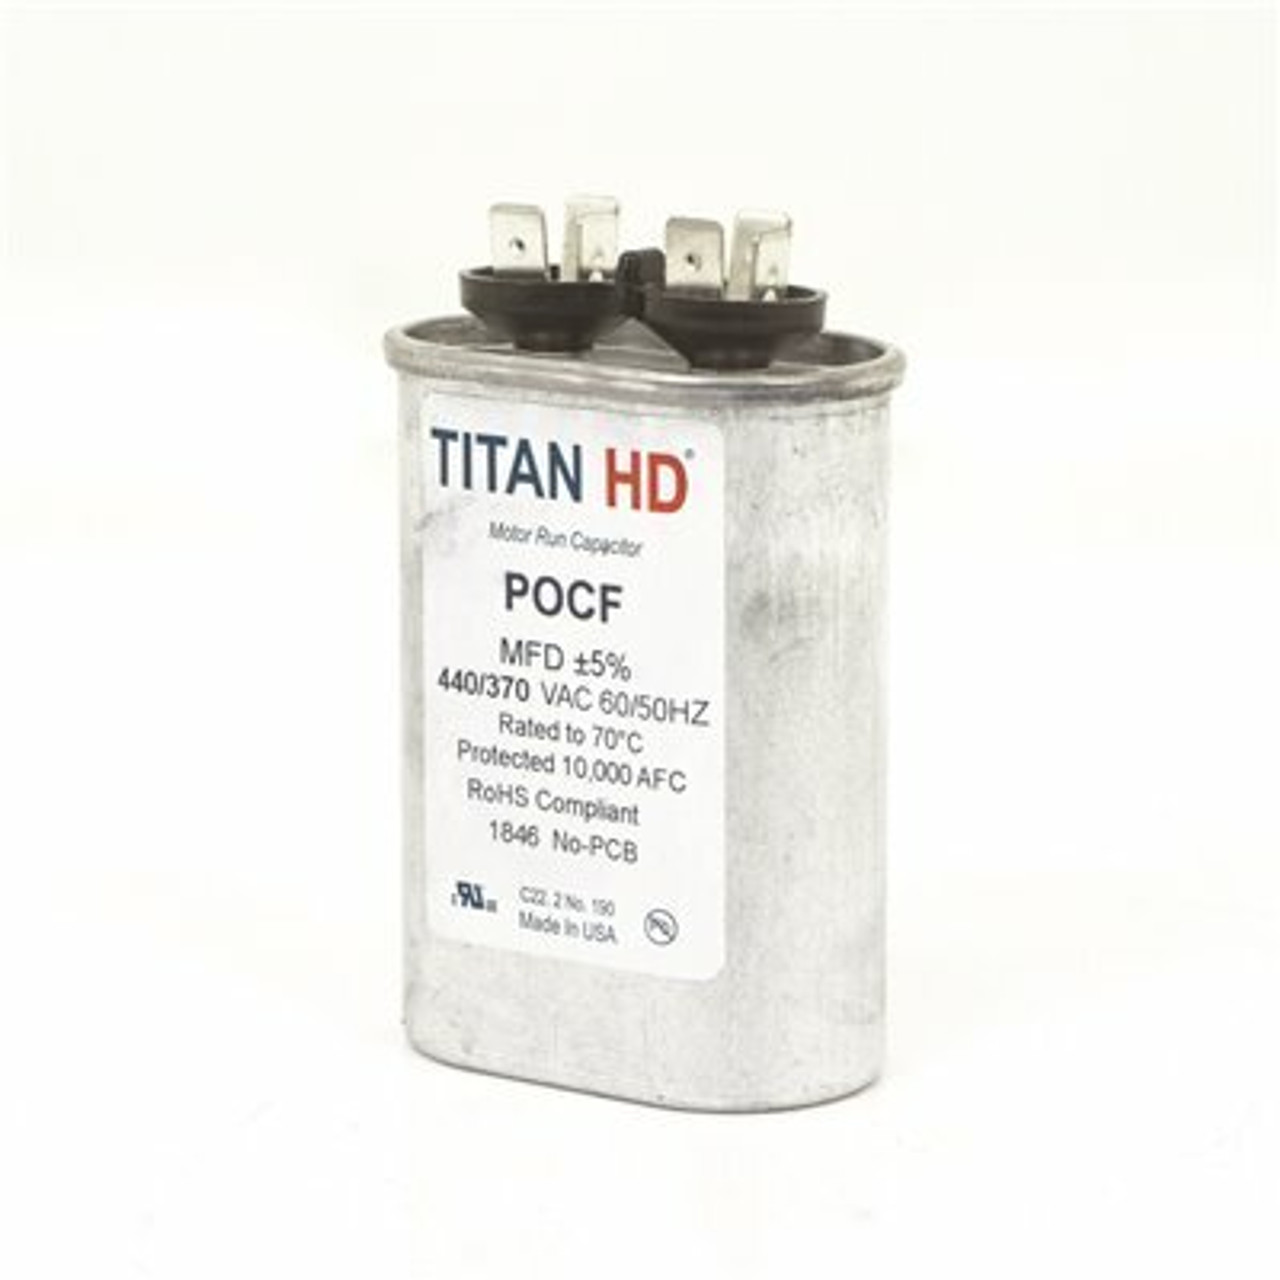 Titan Hd 20 Mfd 440/370-Volt Oval Run Capacitor